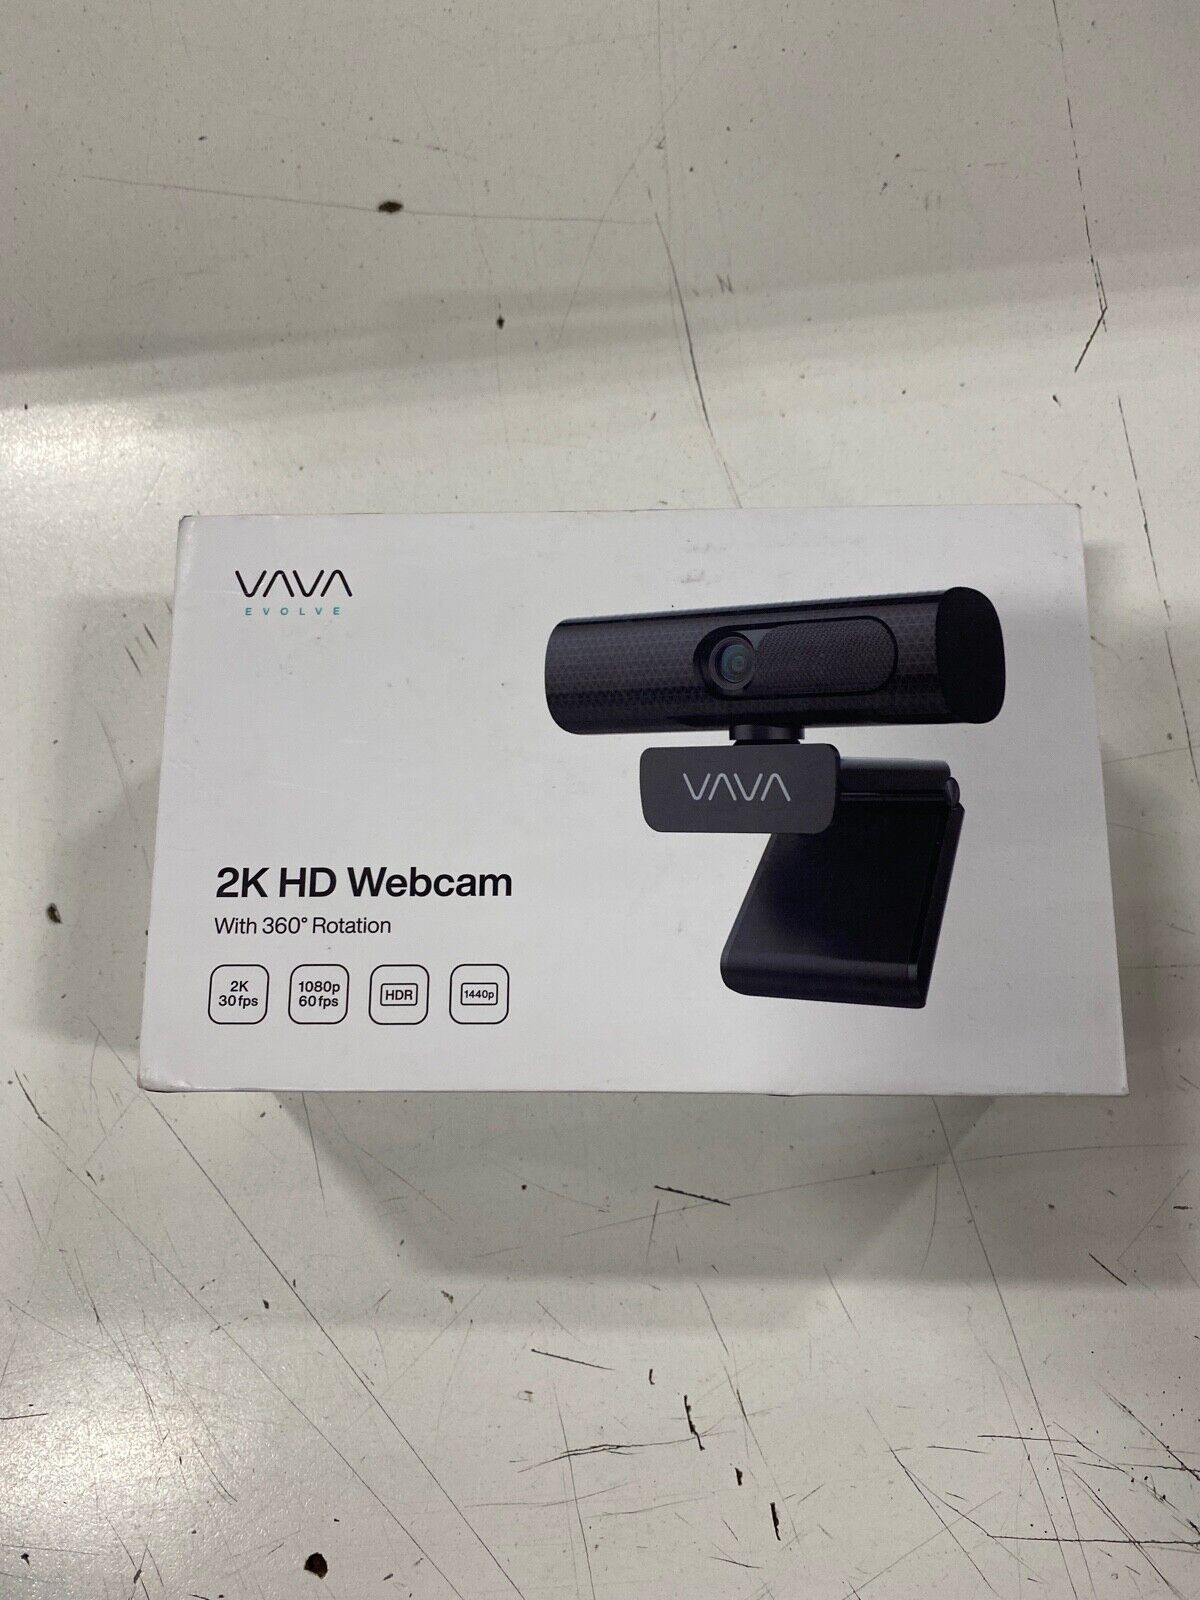 VAVA Evolve 2K HD Web Camera with Dual Microphones w/ Autofocus